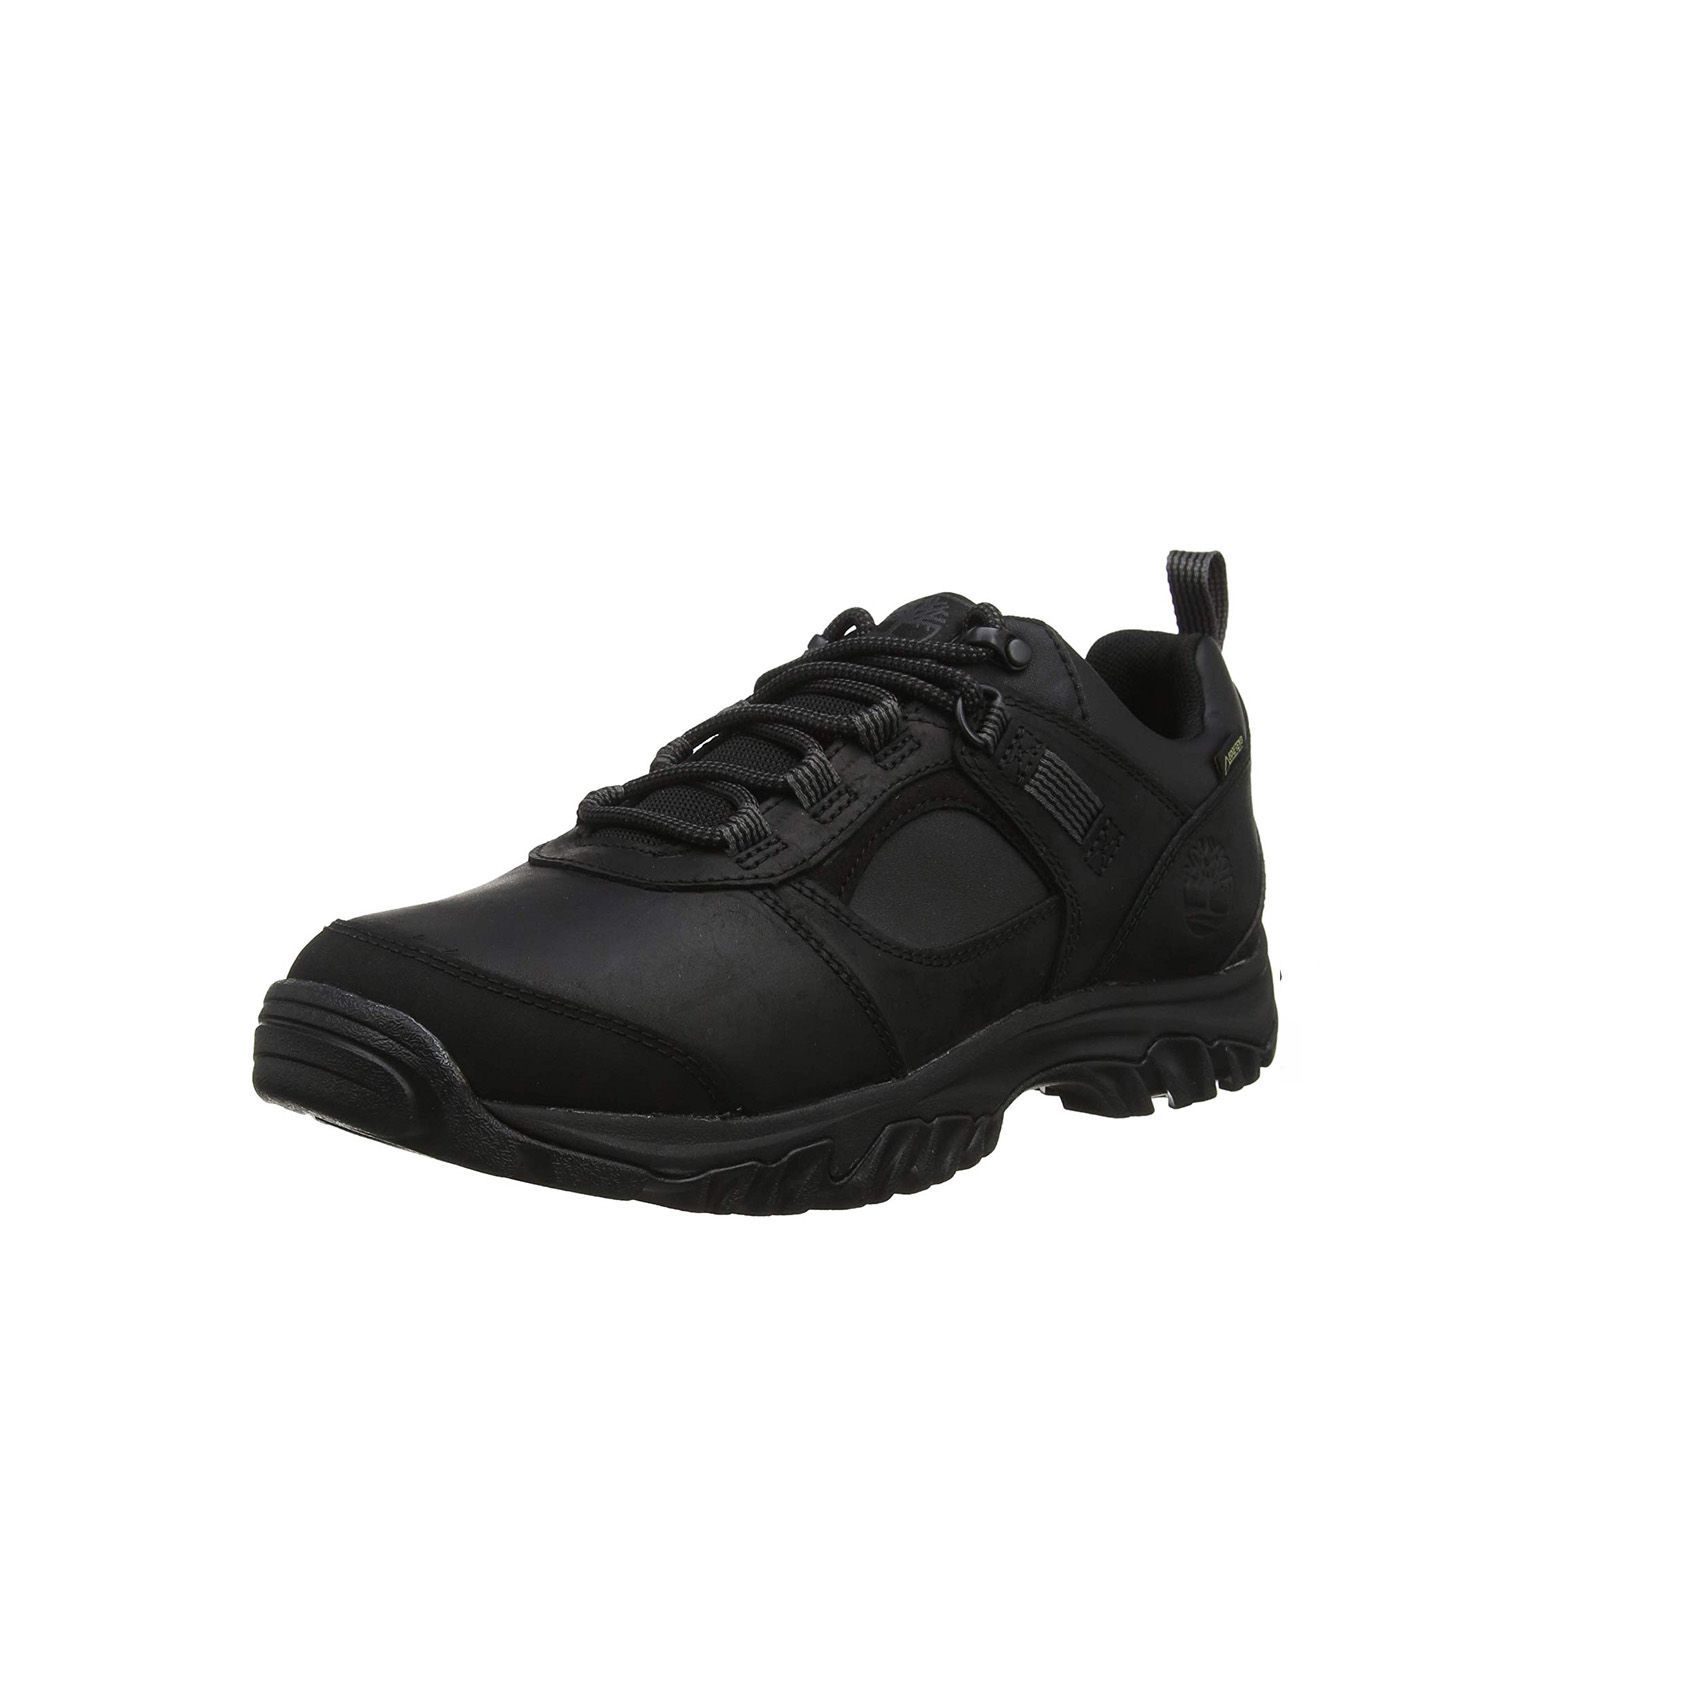 good black walking shoes